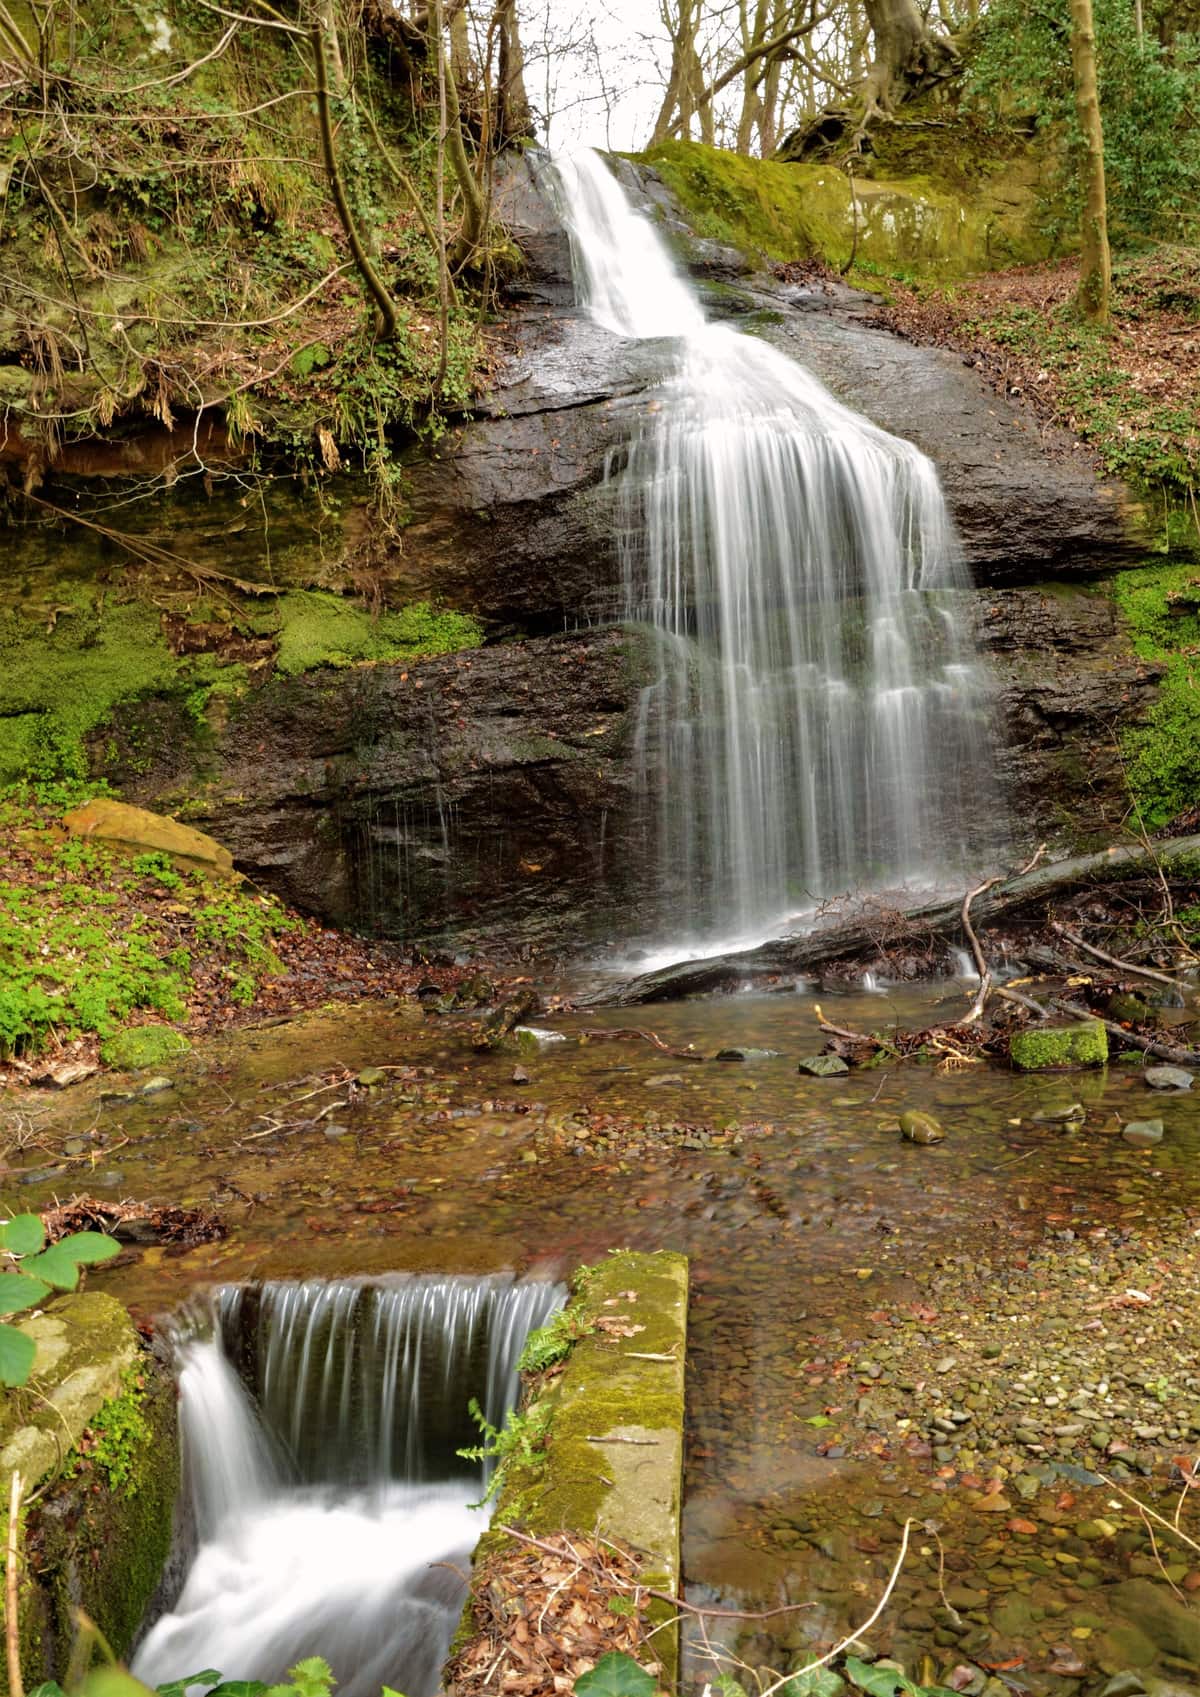 Kemback Waterfalls in Fife, Scotland